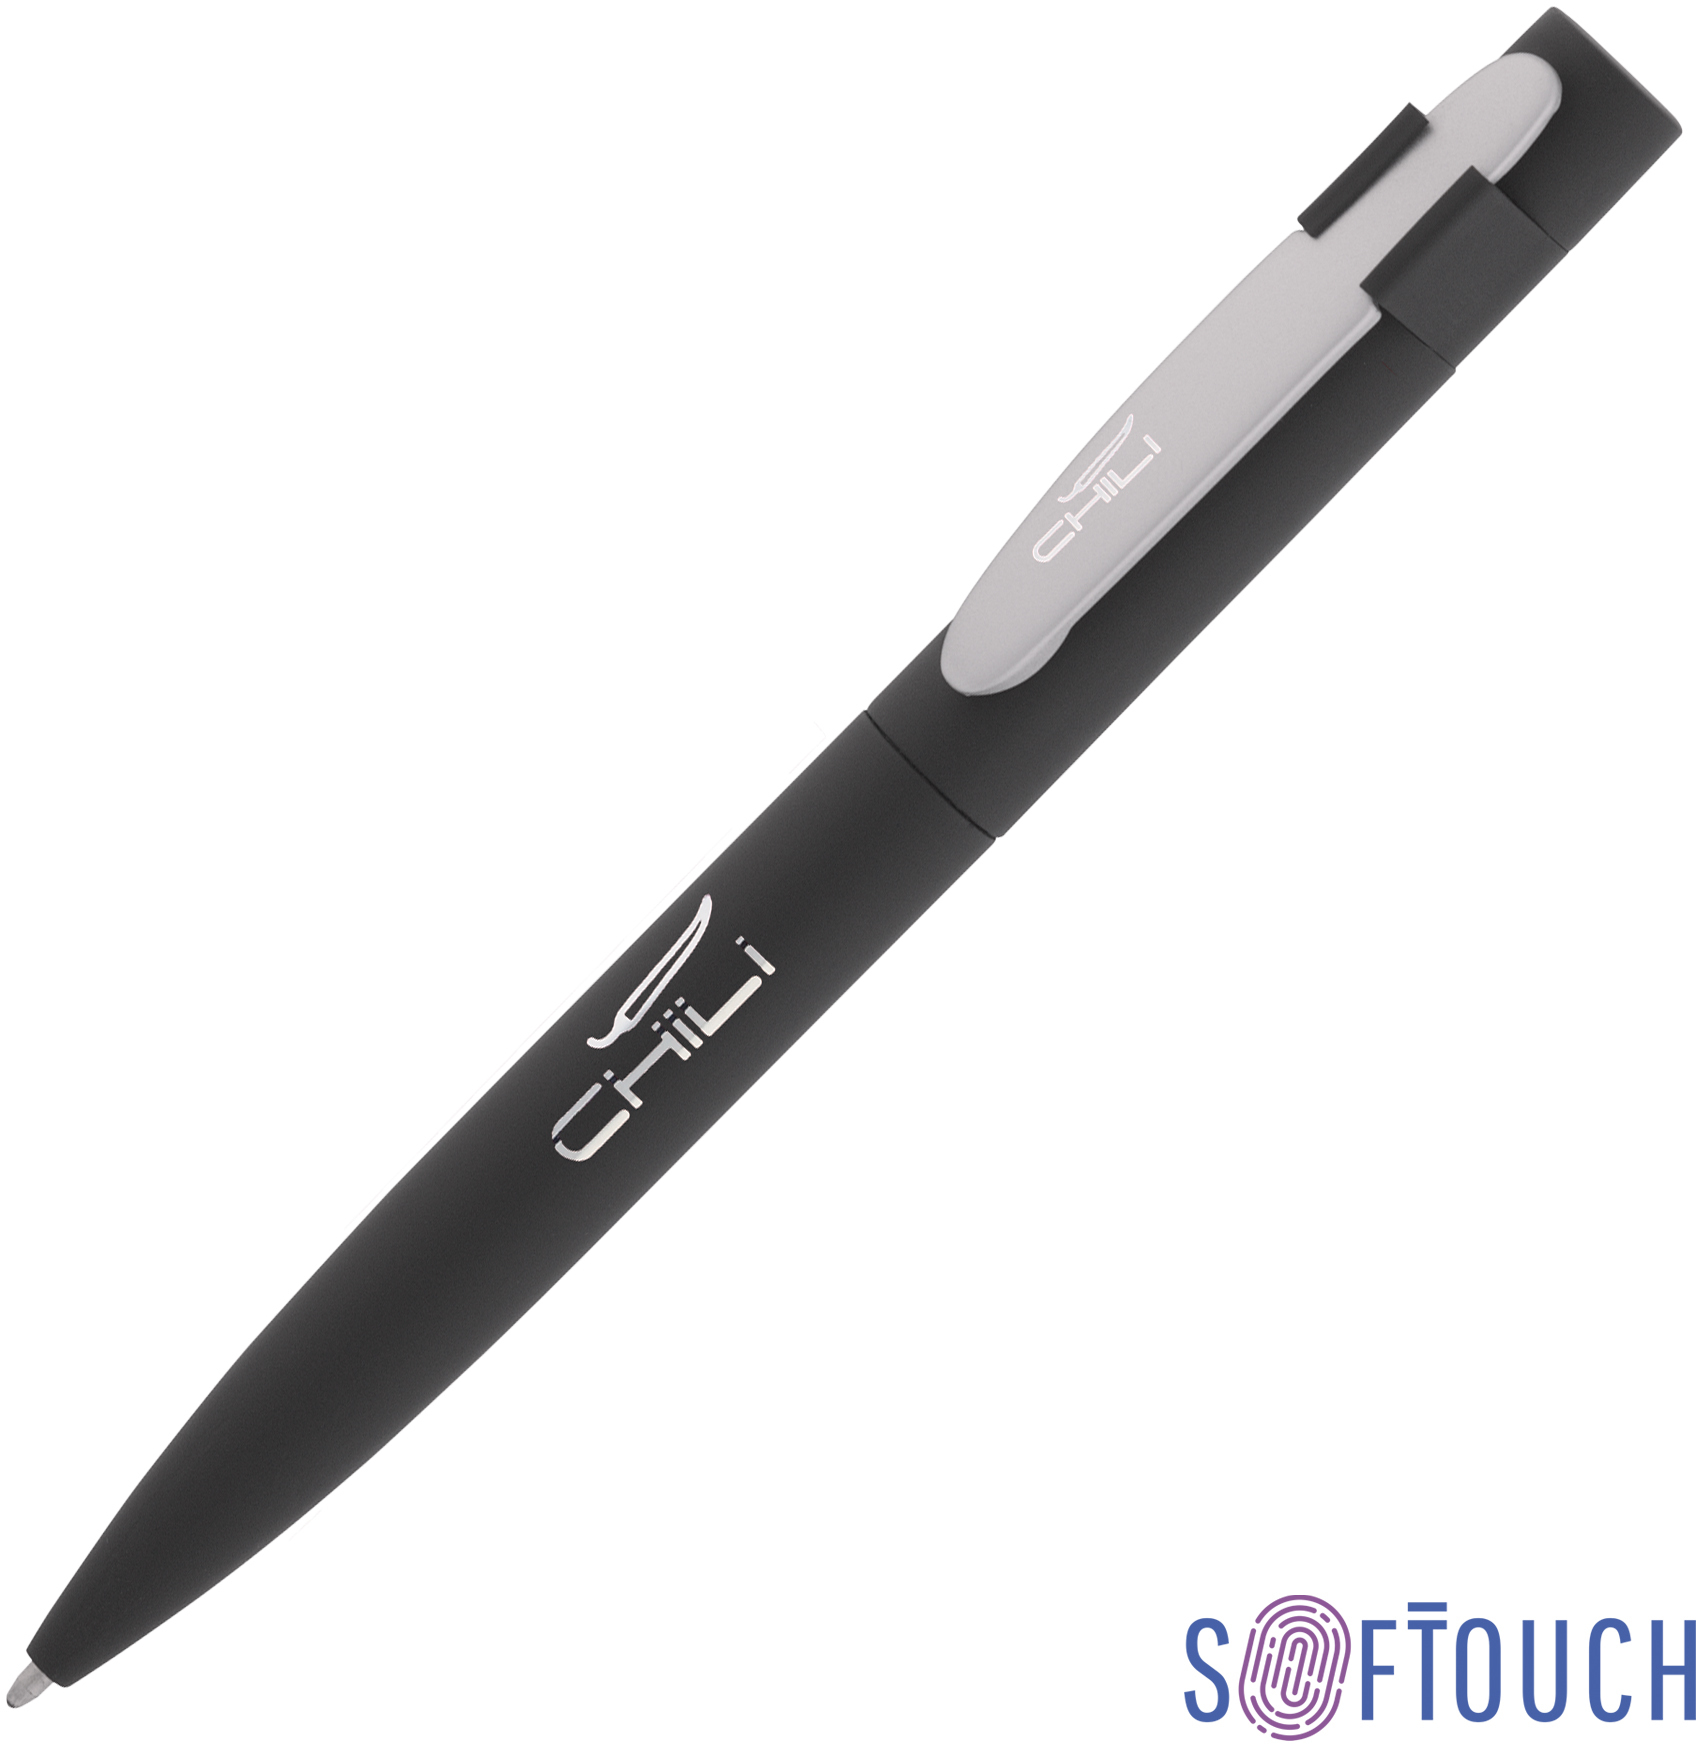 Артикул: E6844-3/SS — Ручка шариковая "Lip", покрытие soft touch